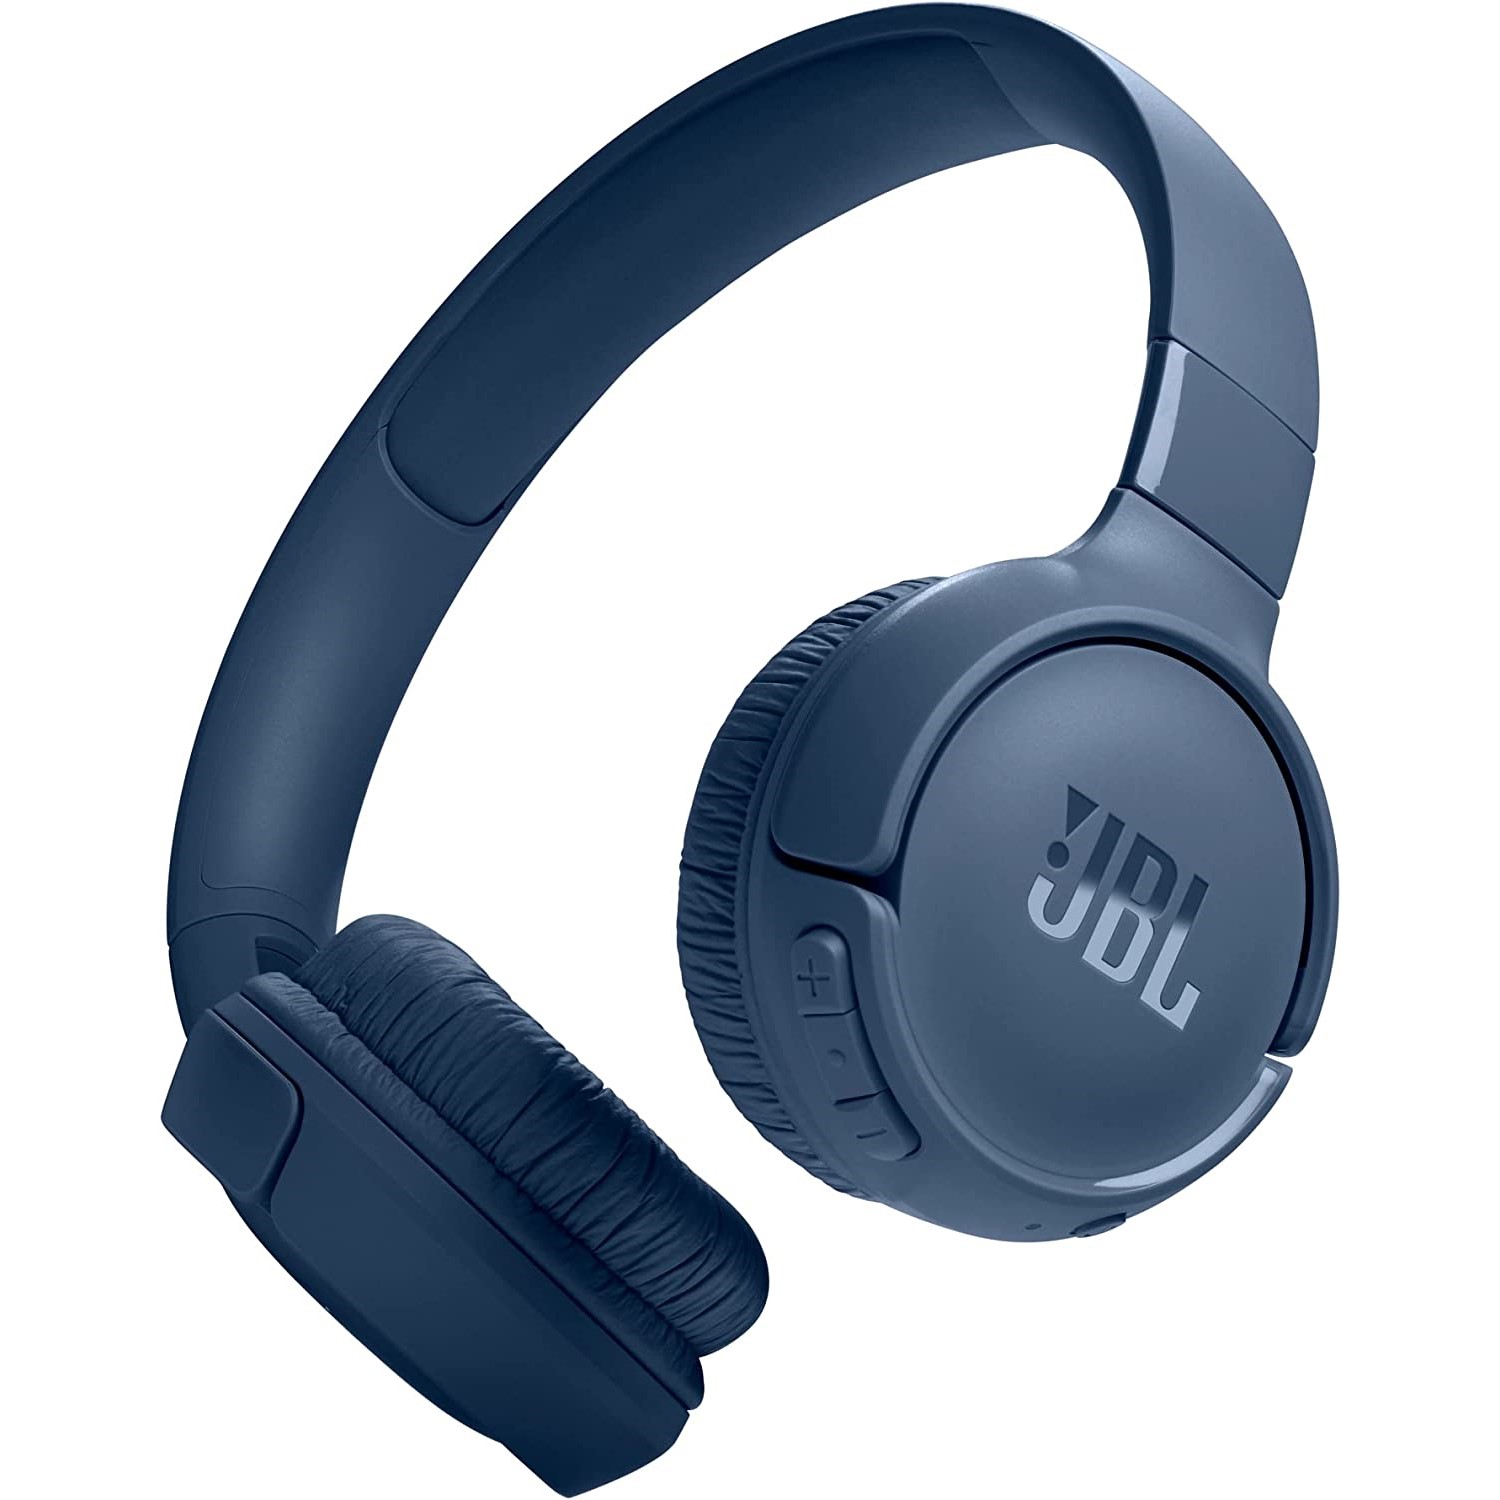 JBL Headphones Harmony: Connecting Bluetooth Headphones To IPhone